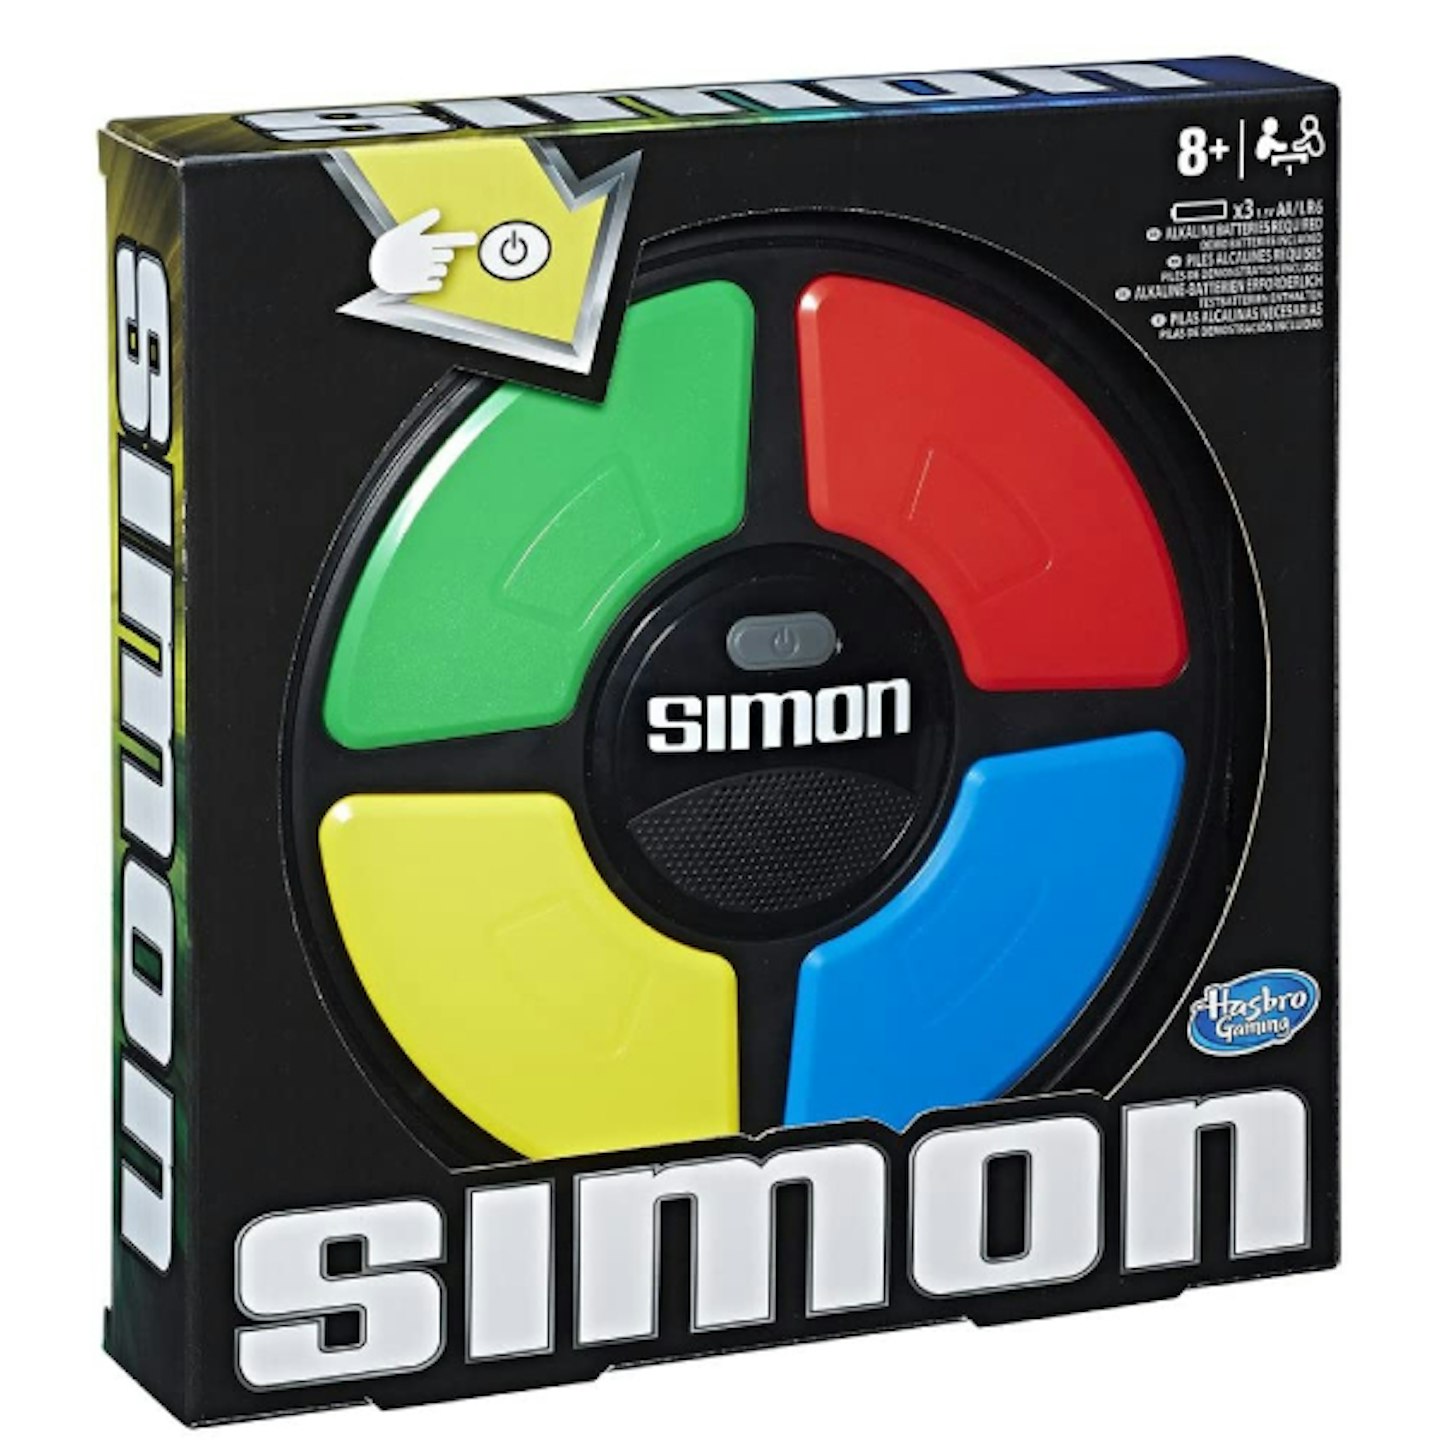 classic Simon game 80s